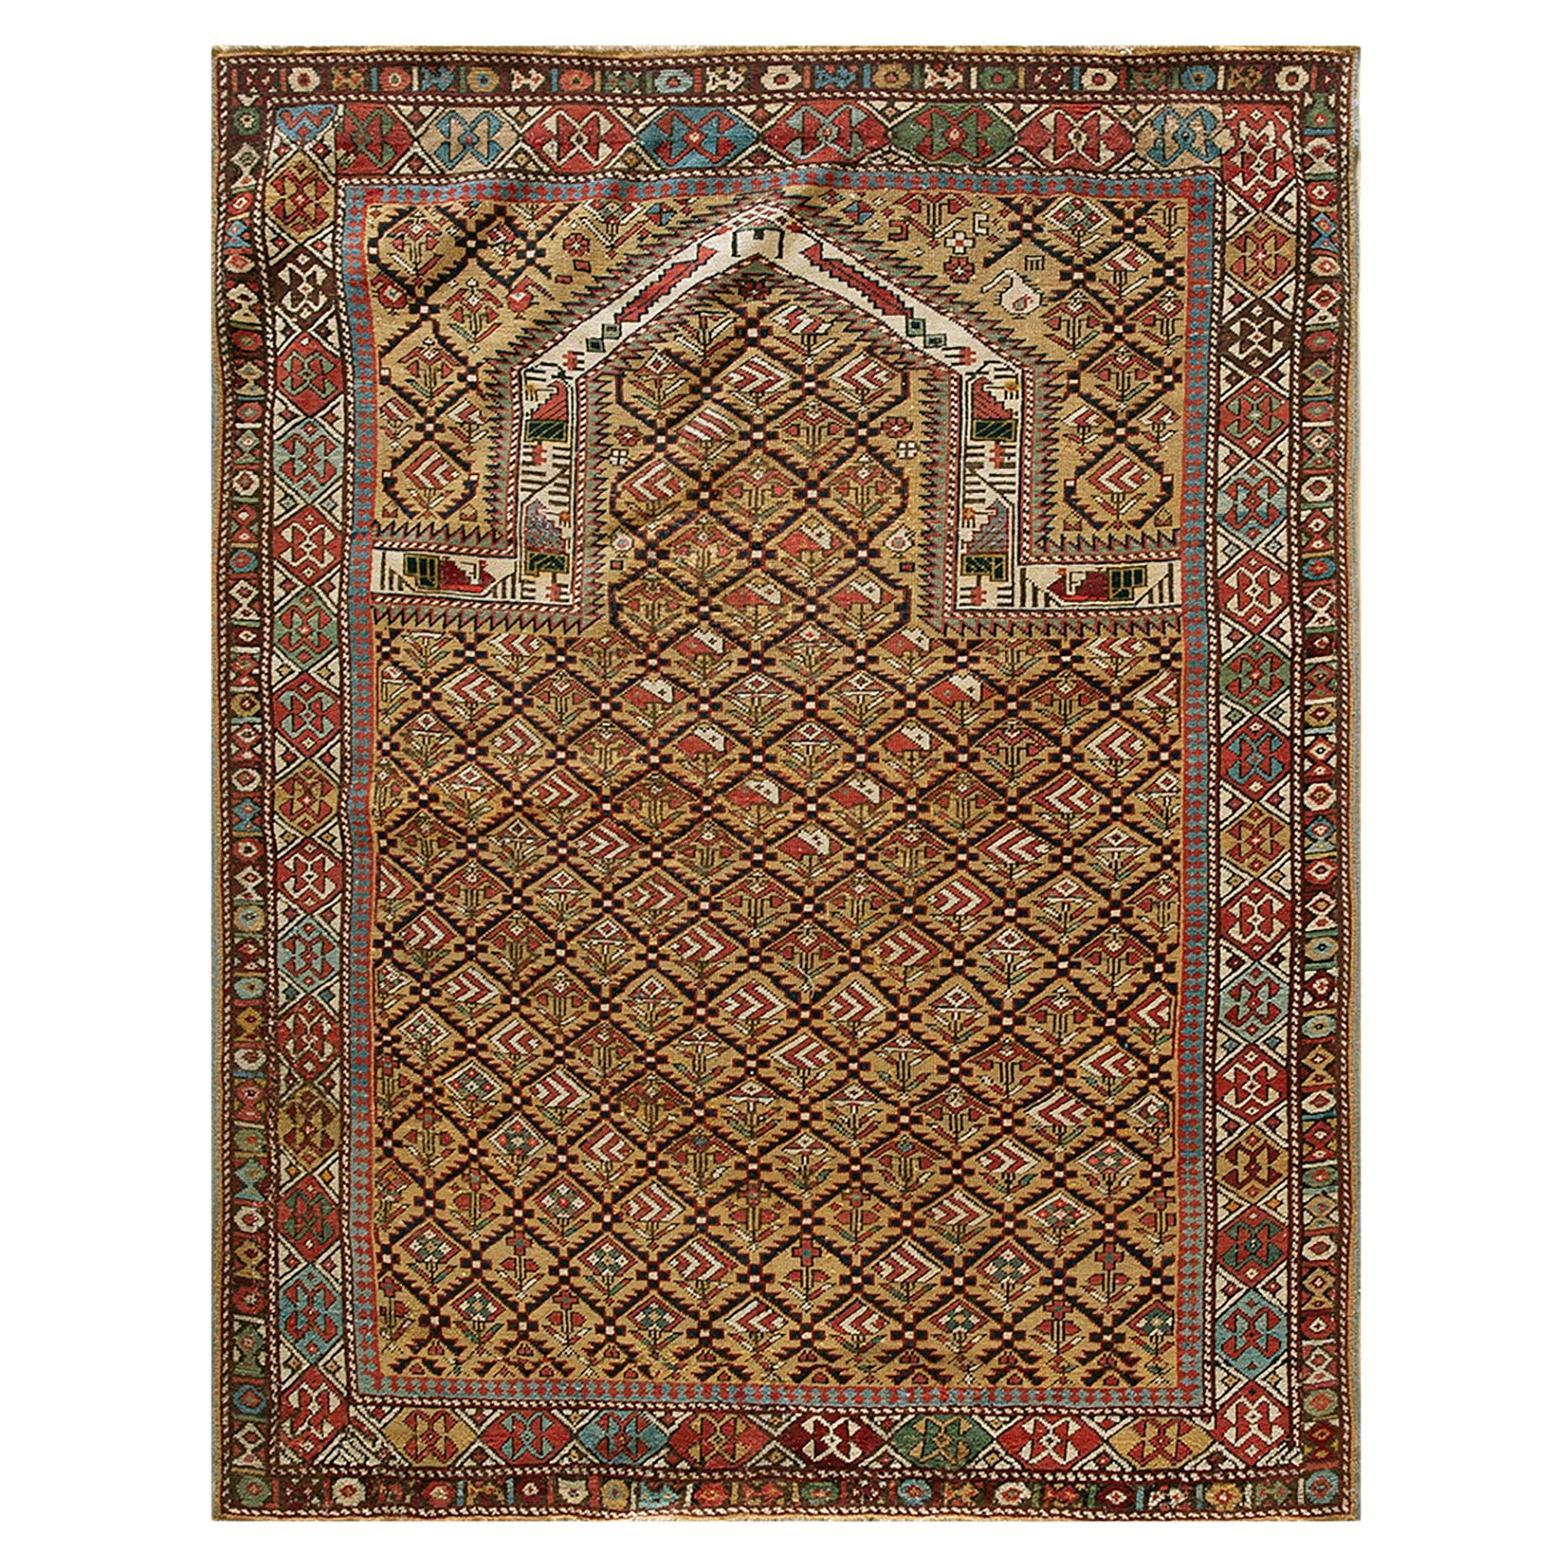 19th Century Caucasian Maraseli Prayer Rug ( 3'6" x 4'10" - 106 x 147 )